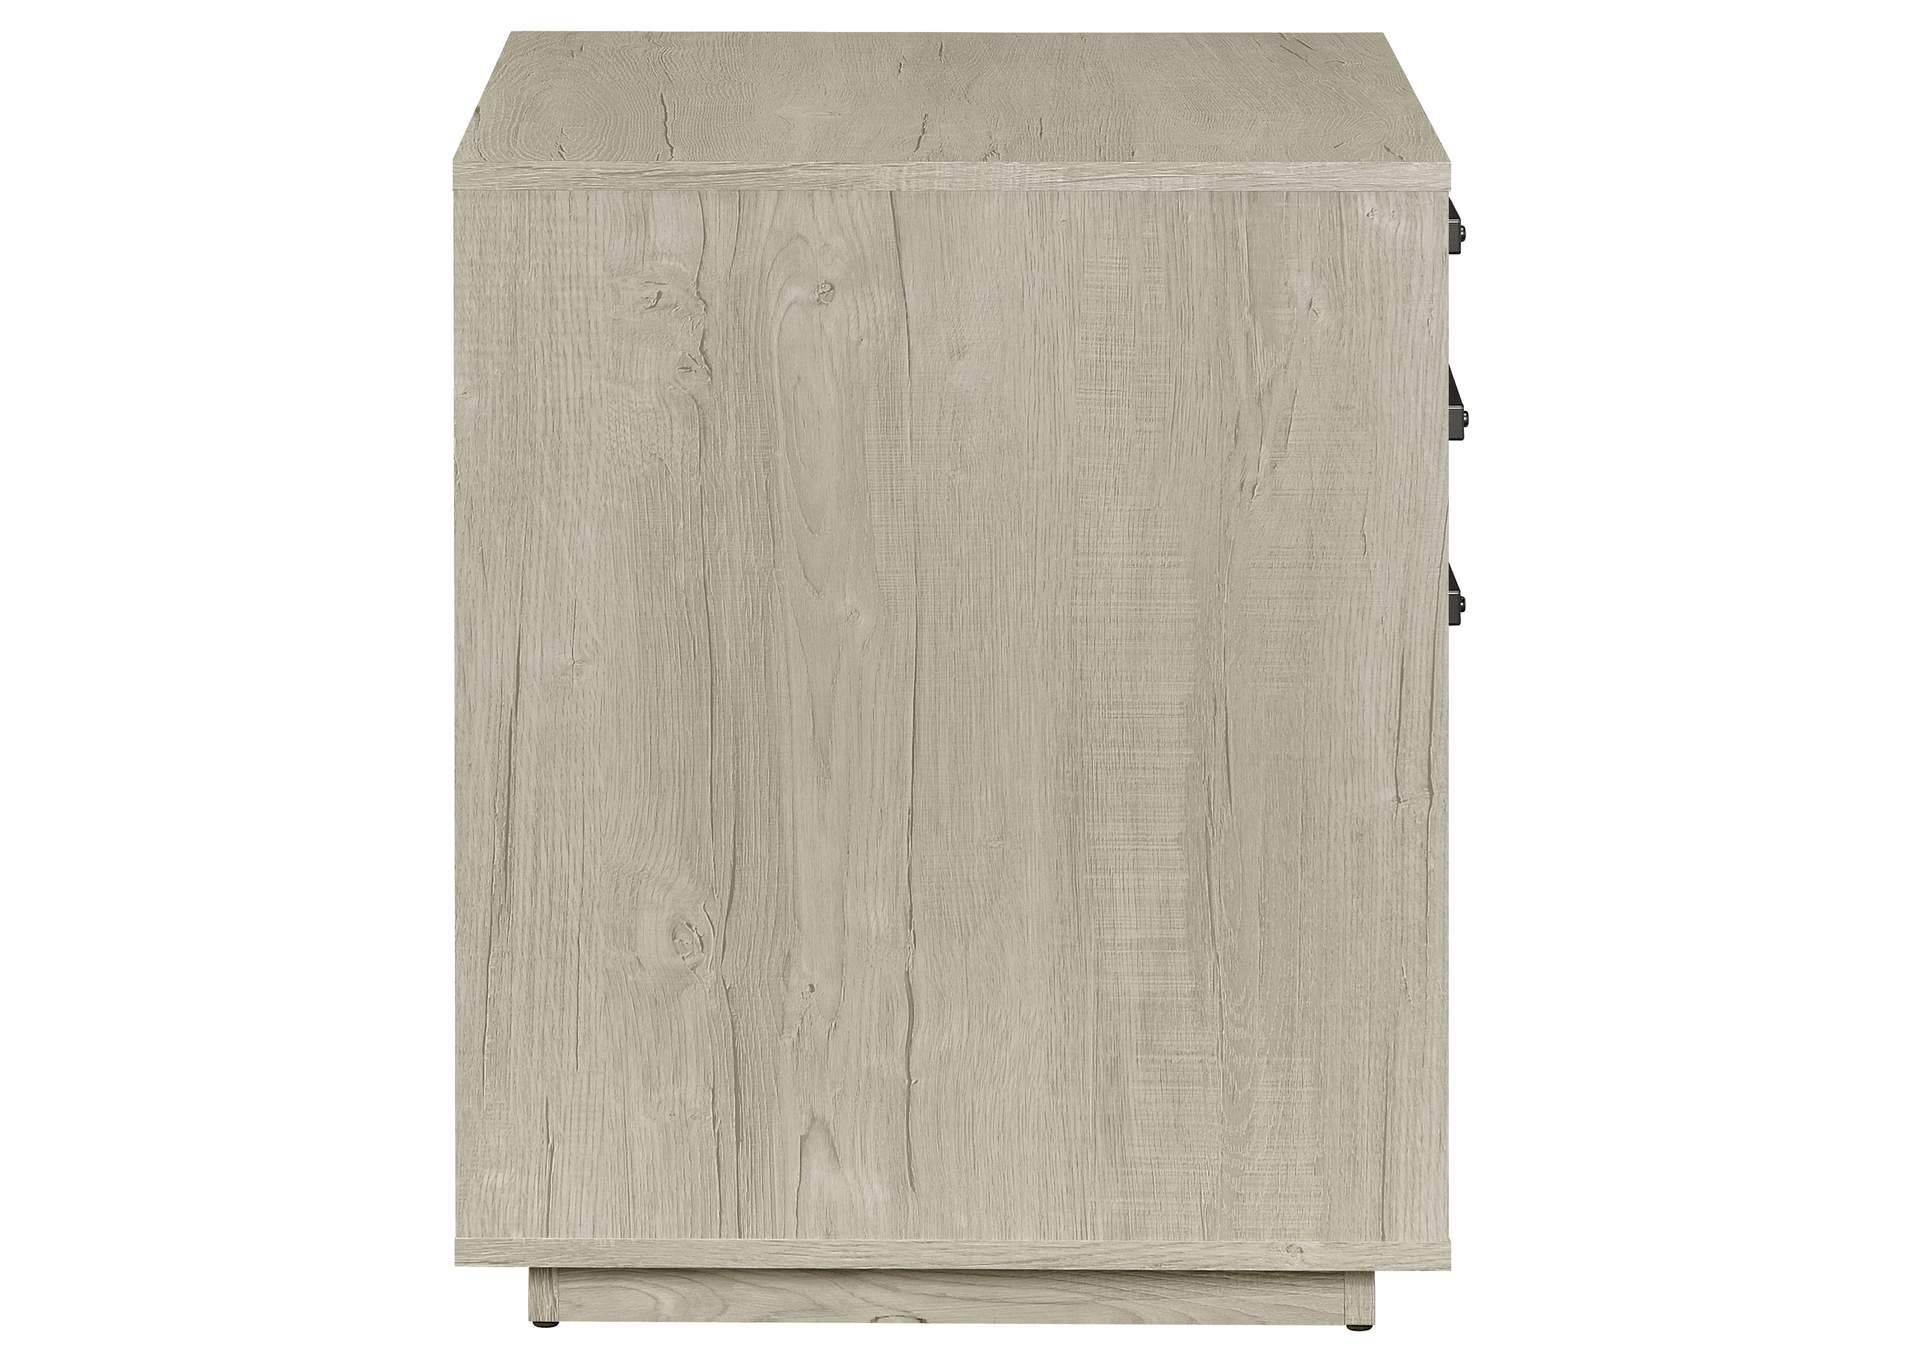 Loomis 3-drawer Square File Cabinet Whitewashed Grey,Coaster Furniture